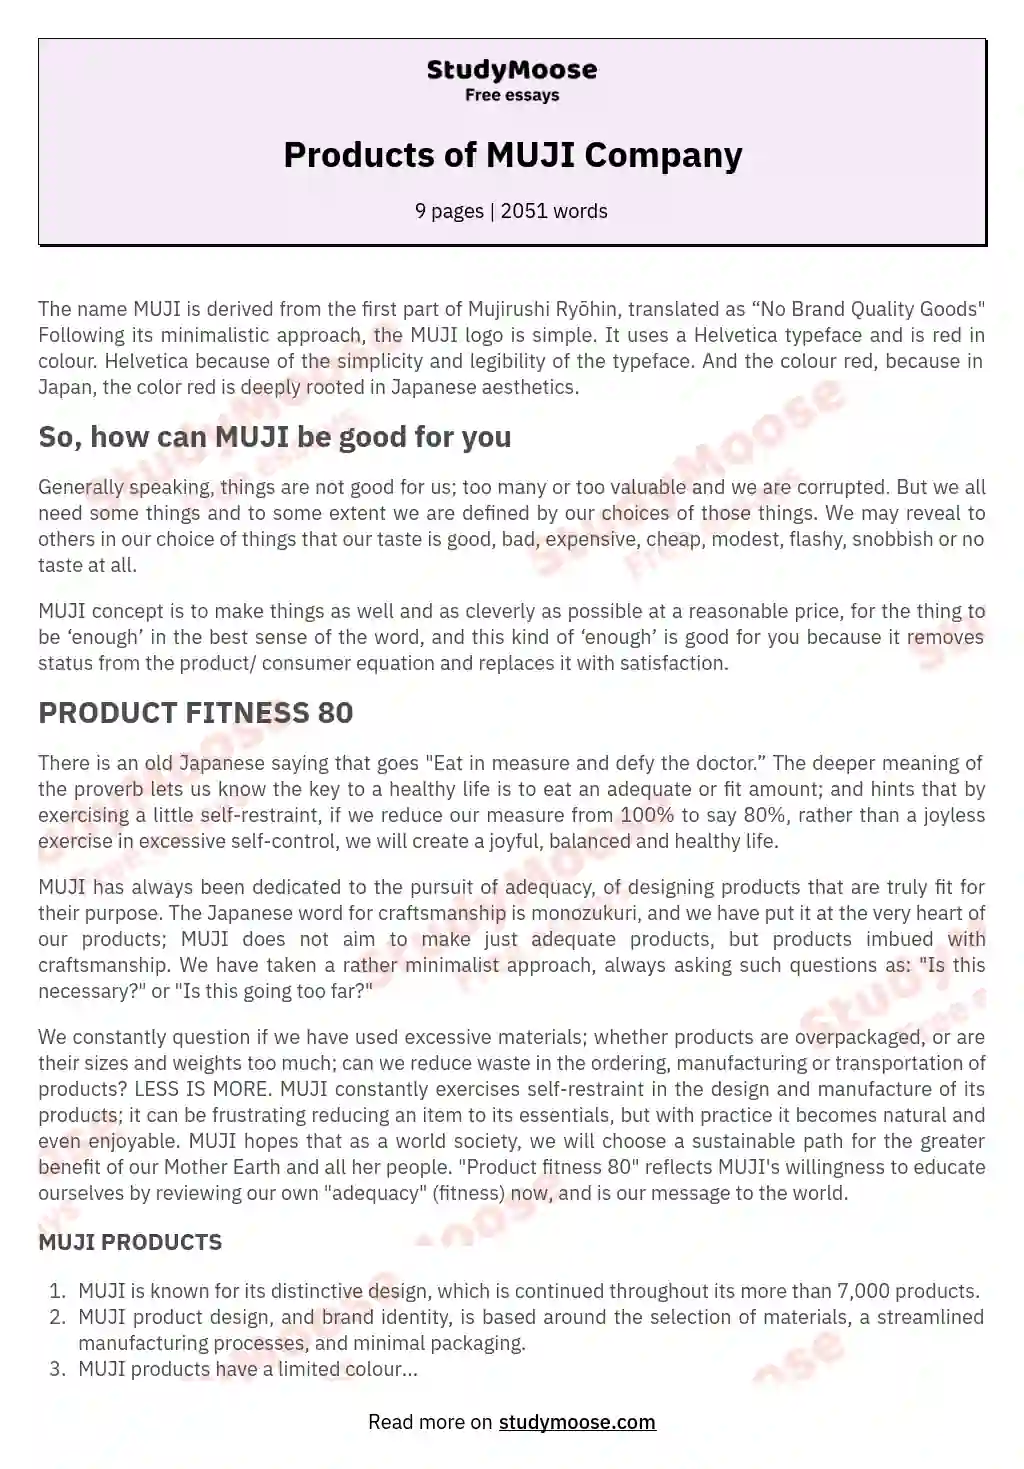 Products of MUJI Company essay